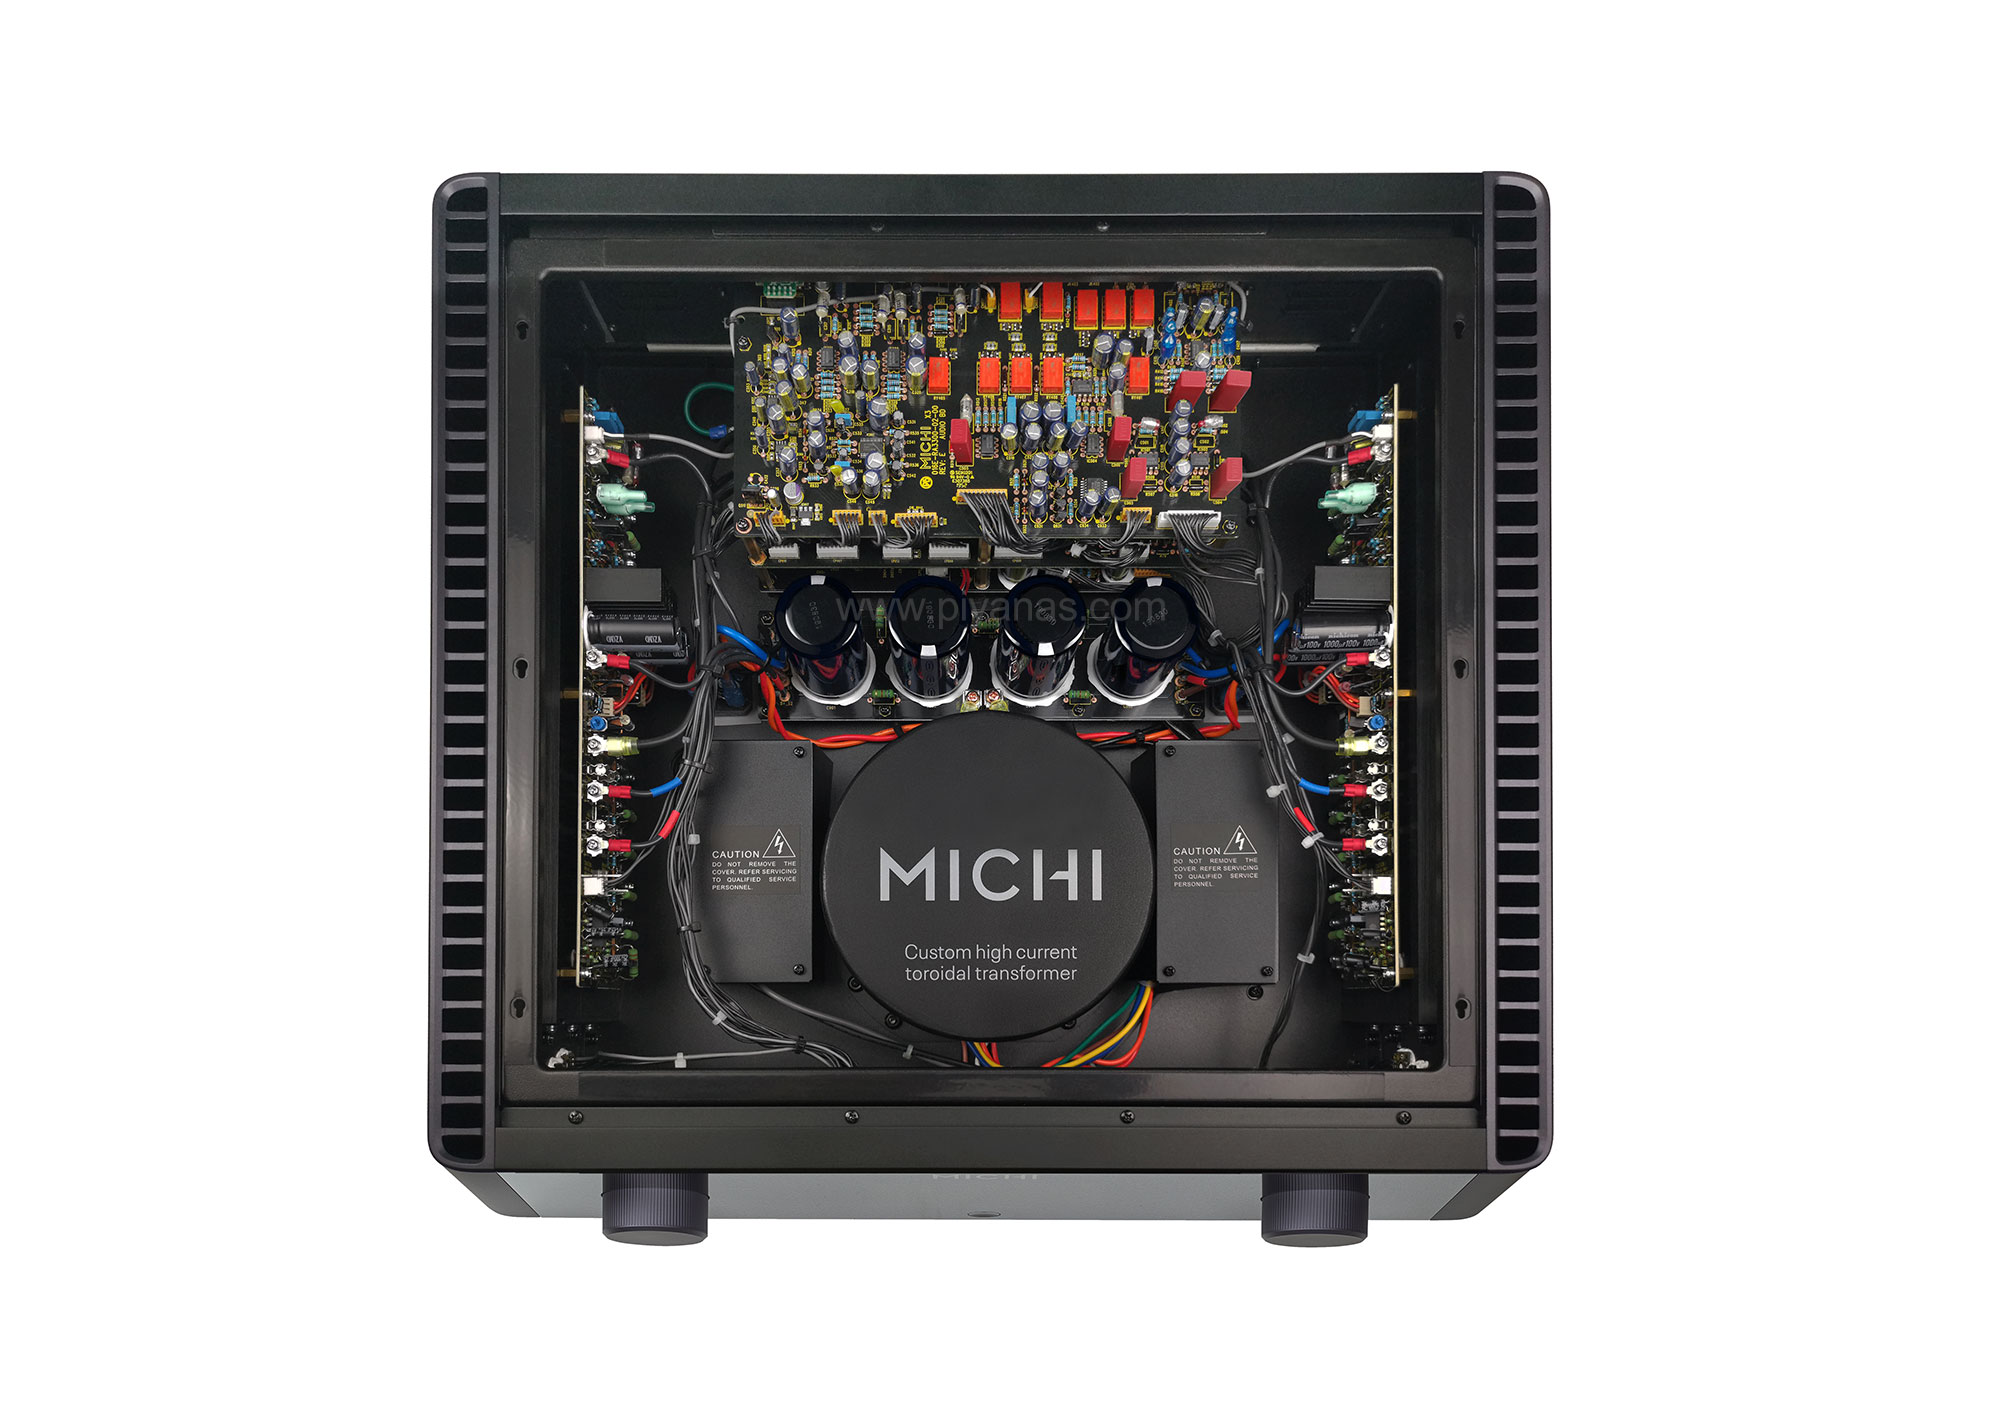 Michi X-3 Series2